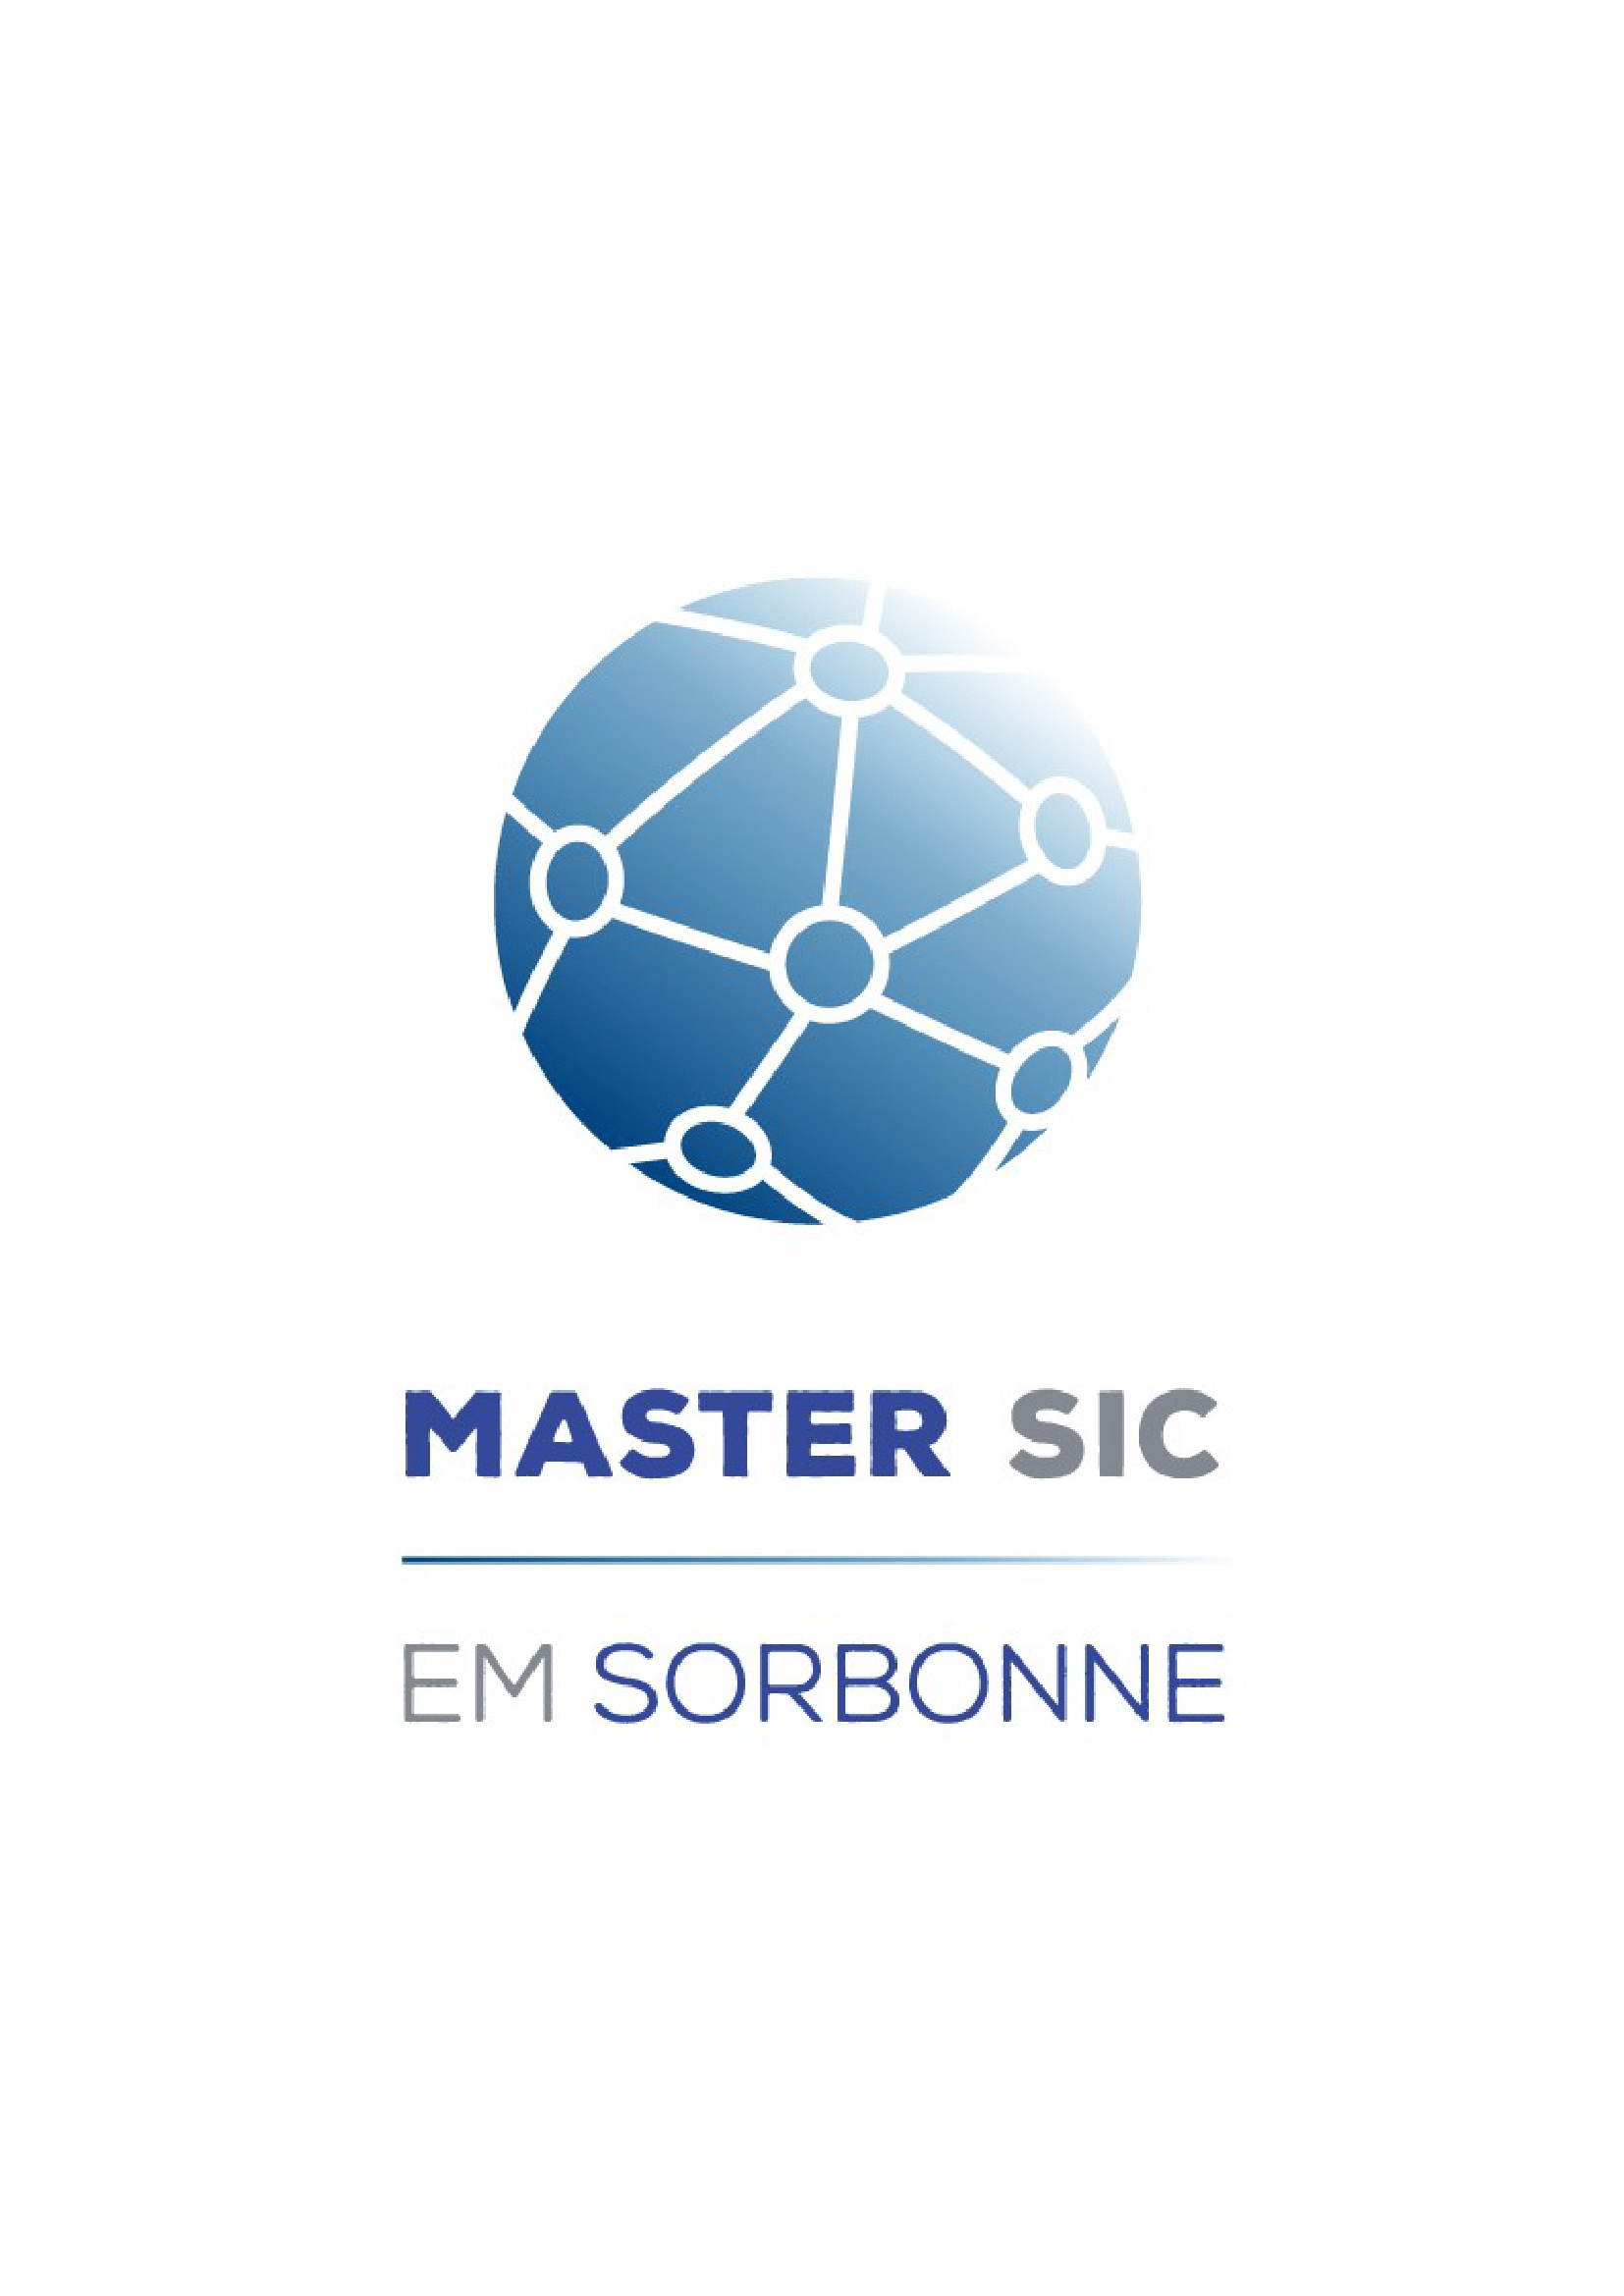 Master 1 Systèmes d’Information et de Connaissance (SIC)  Mention Management des Systèmes d’Information (MSI)